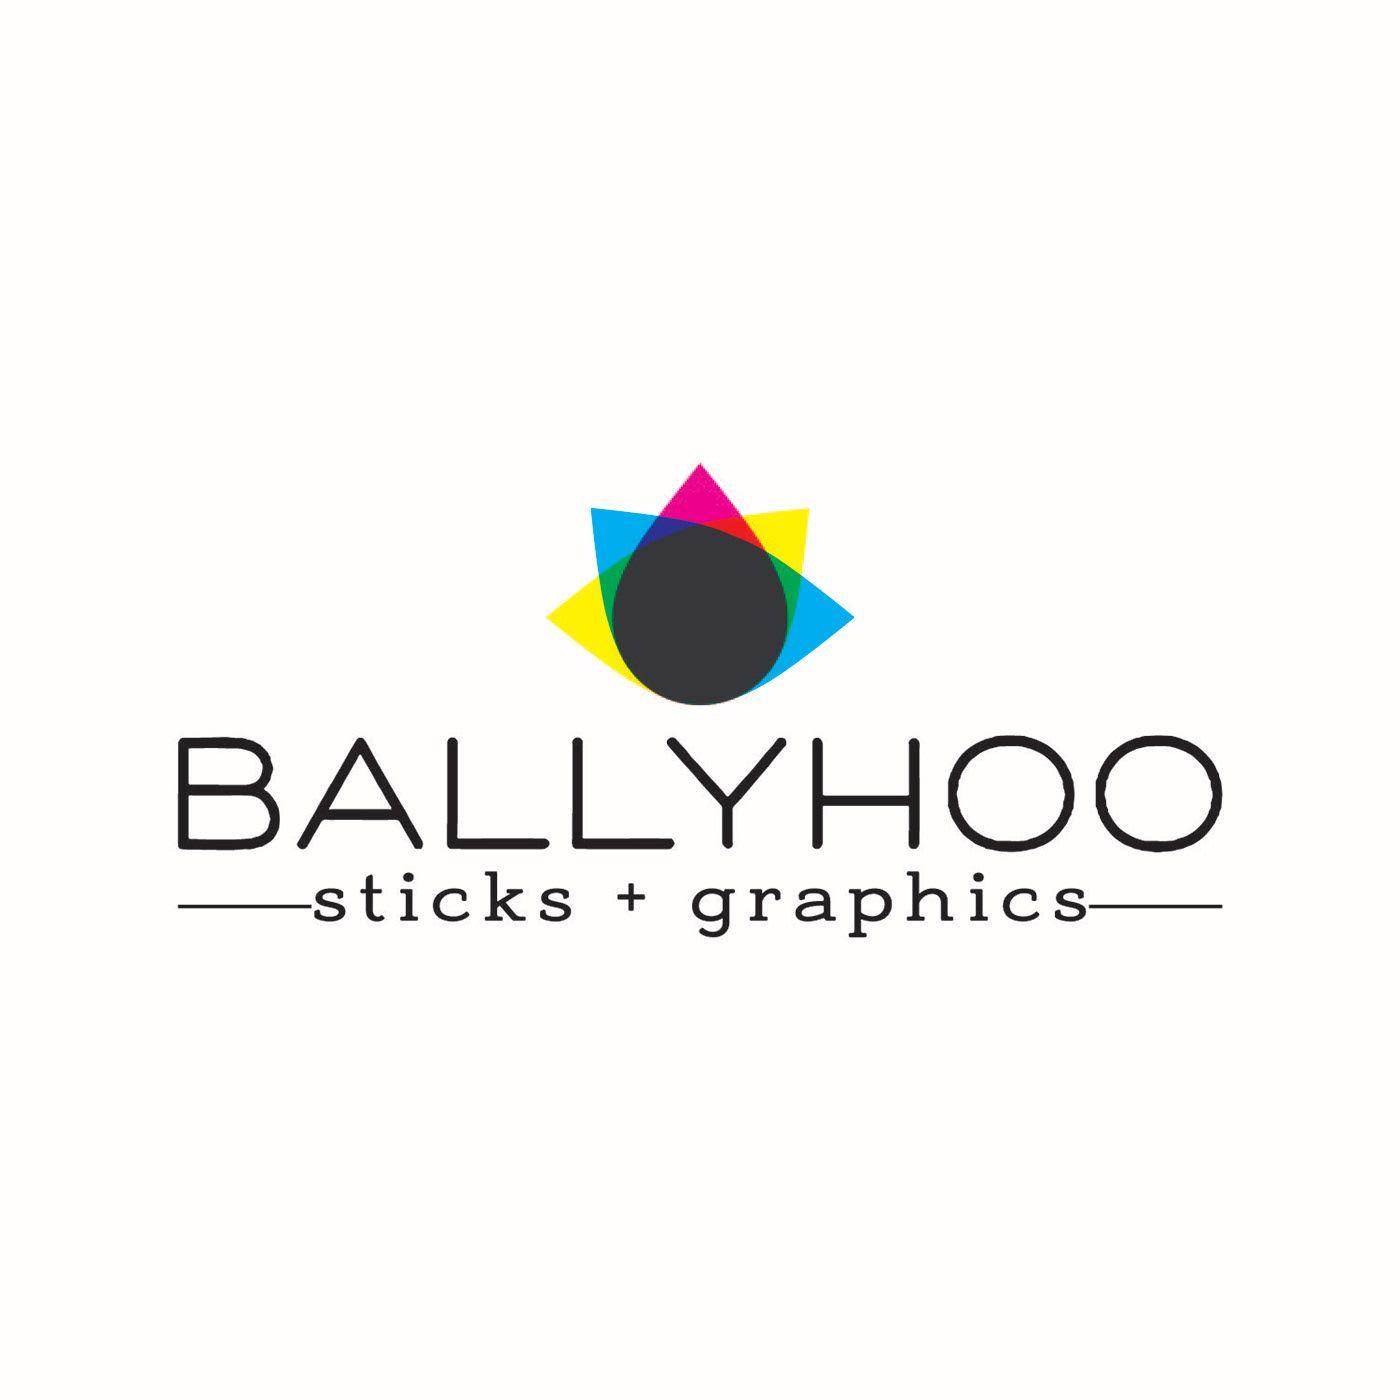 Ballyhoo Logo - Ballyhoo logo on Behance